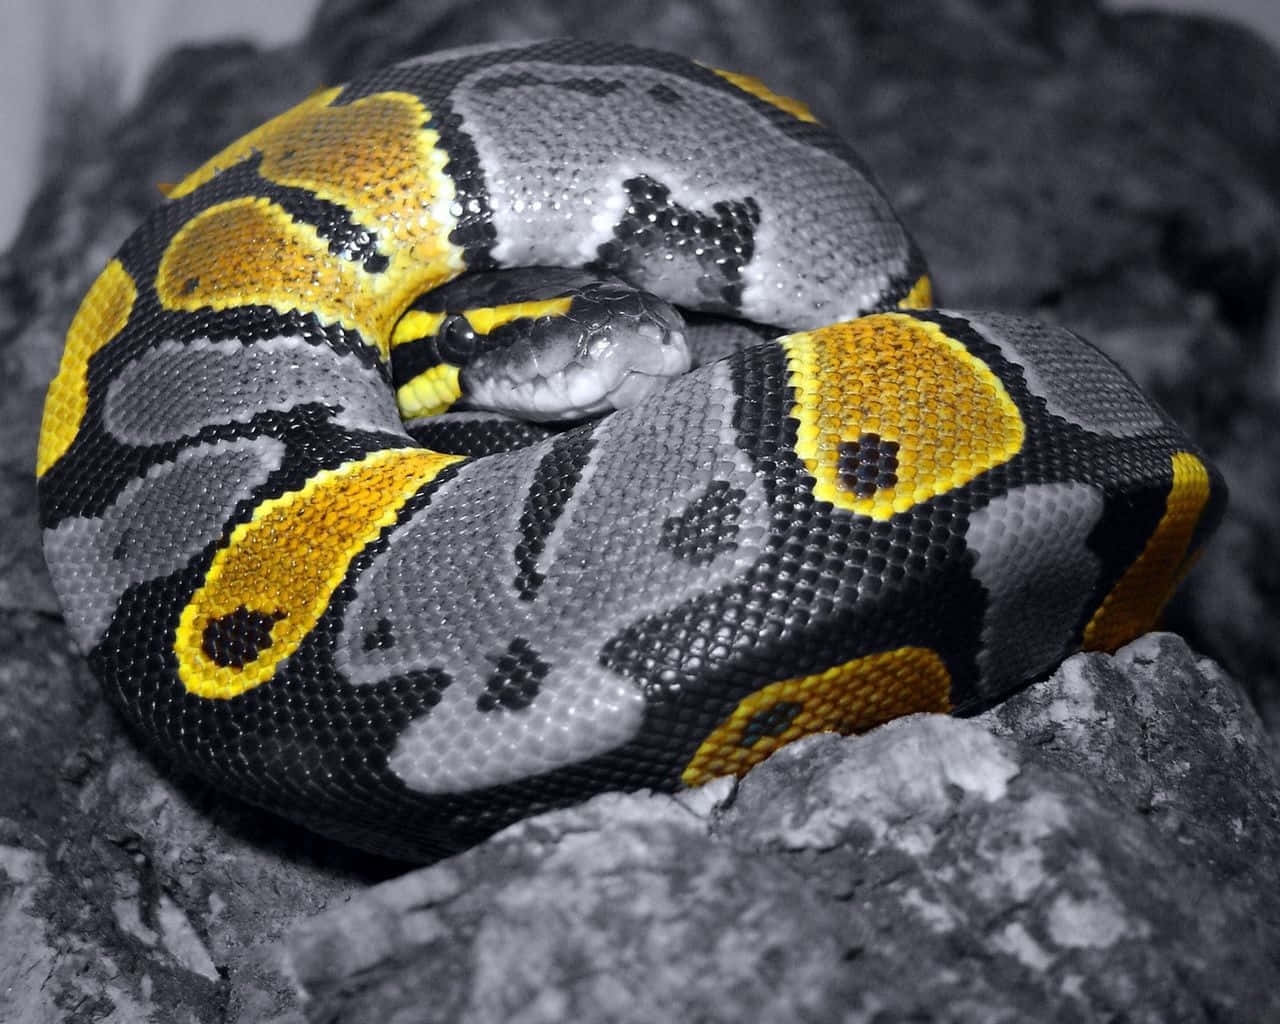 A vibrant yellow snake slithering through its natural habitat Wallpaper